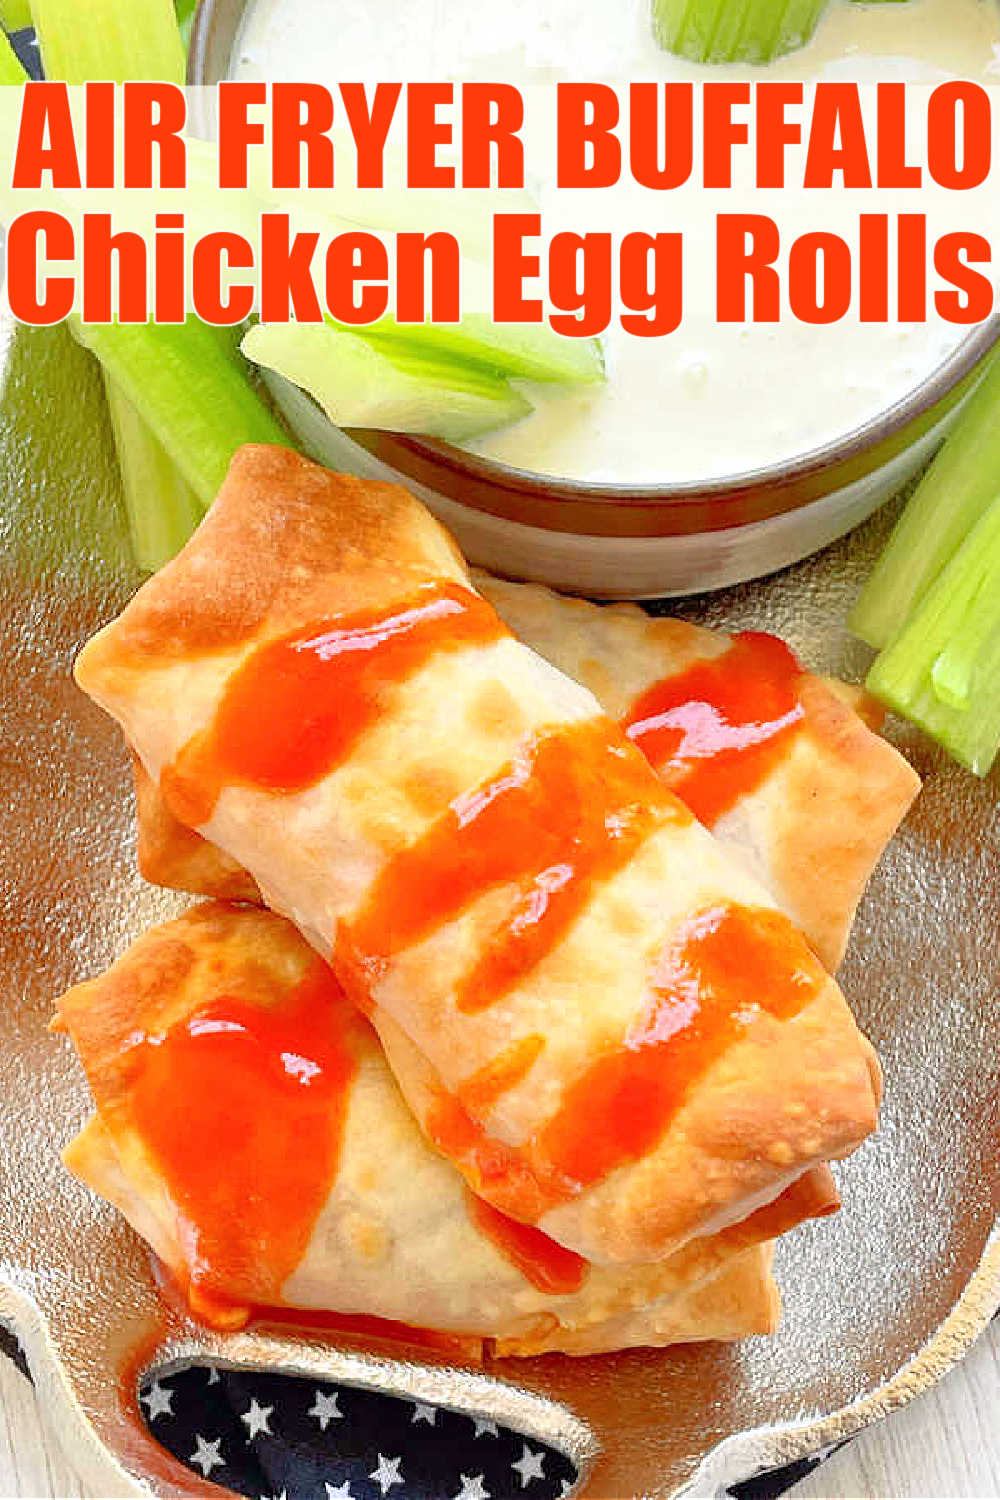 Air Fryer Buffalo Chicken Egg Rolls | Foodtastic Mom #airfryerrecipes #buffalochicken #chickenrecipes #airfryerbuffalochickeneggrolls via @foodtasticmom